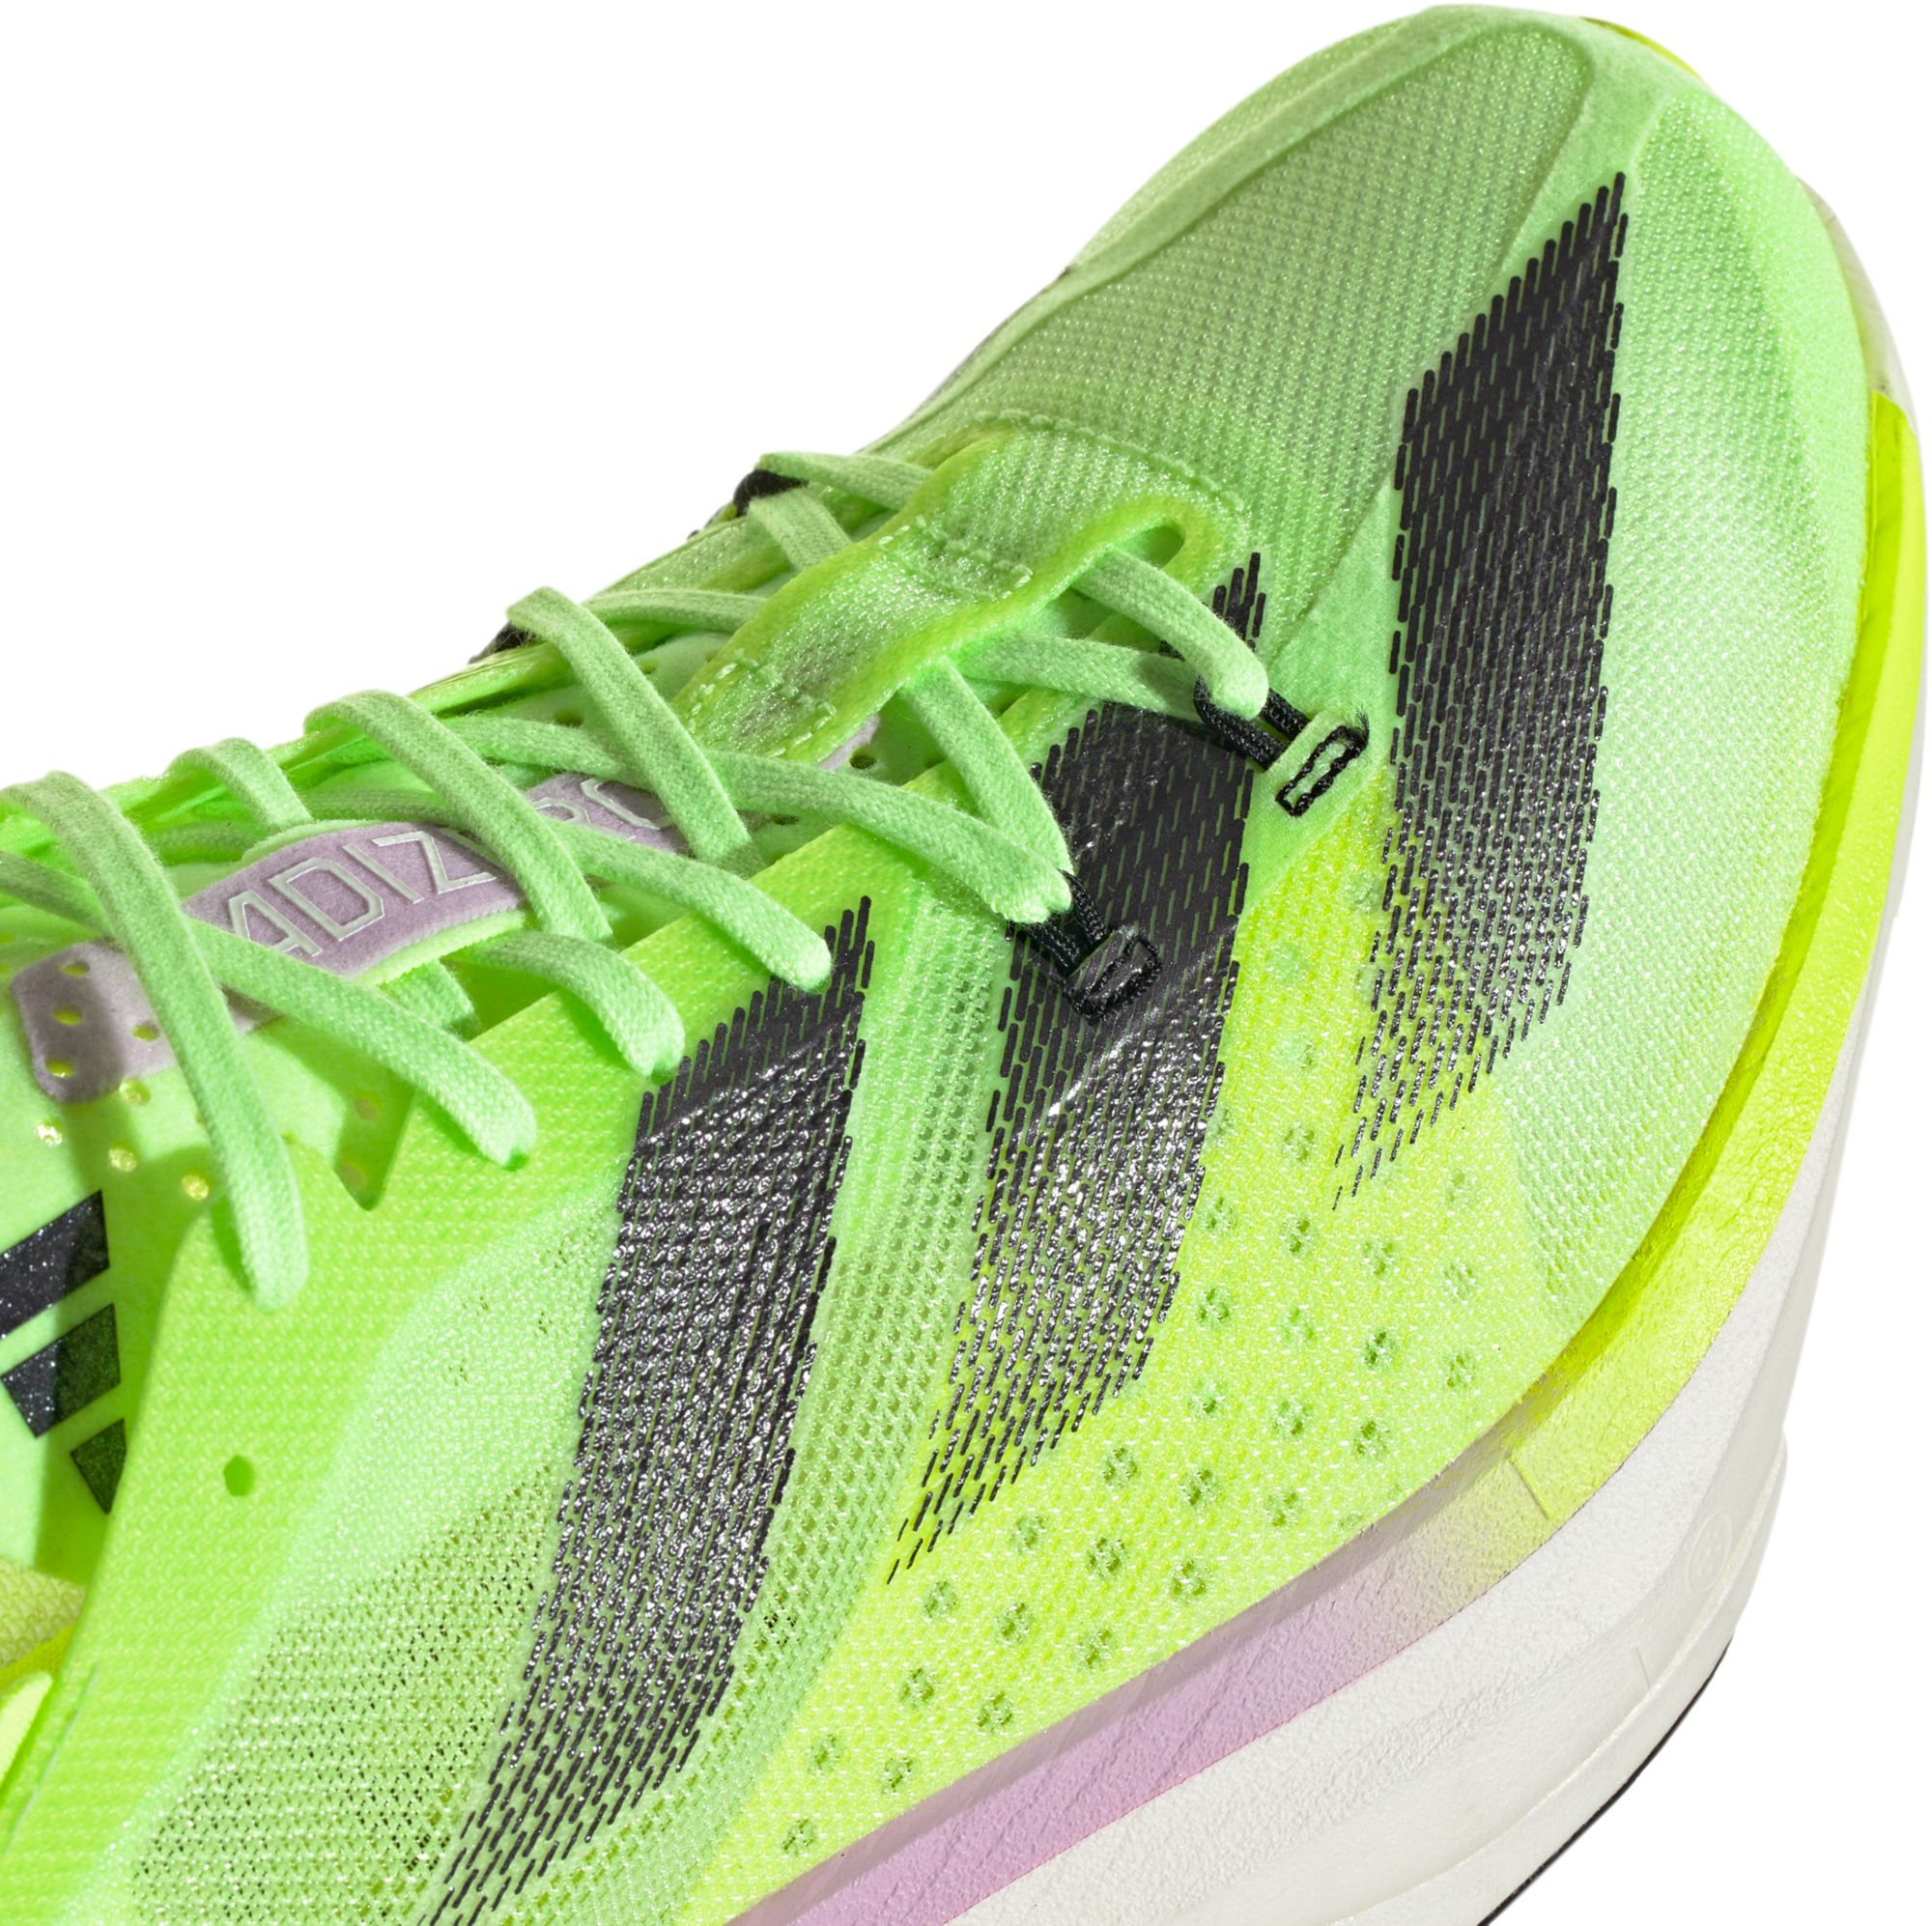 adidas Women's Adizero Adios Pro 3 Running Shoes